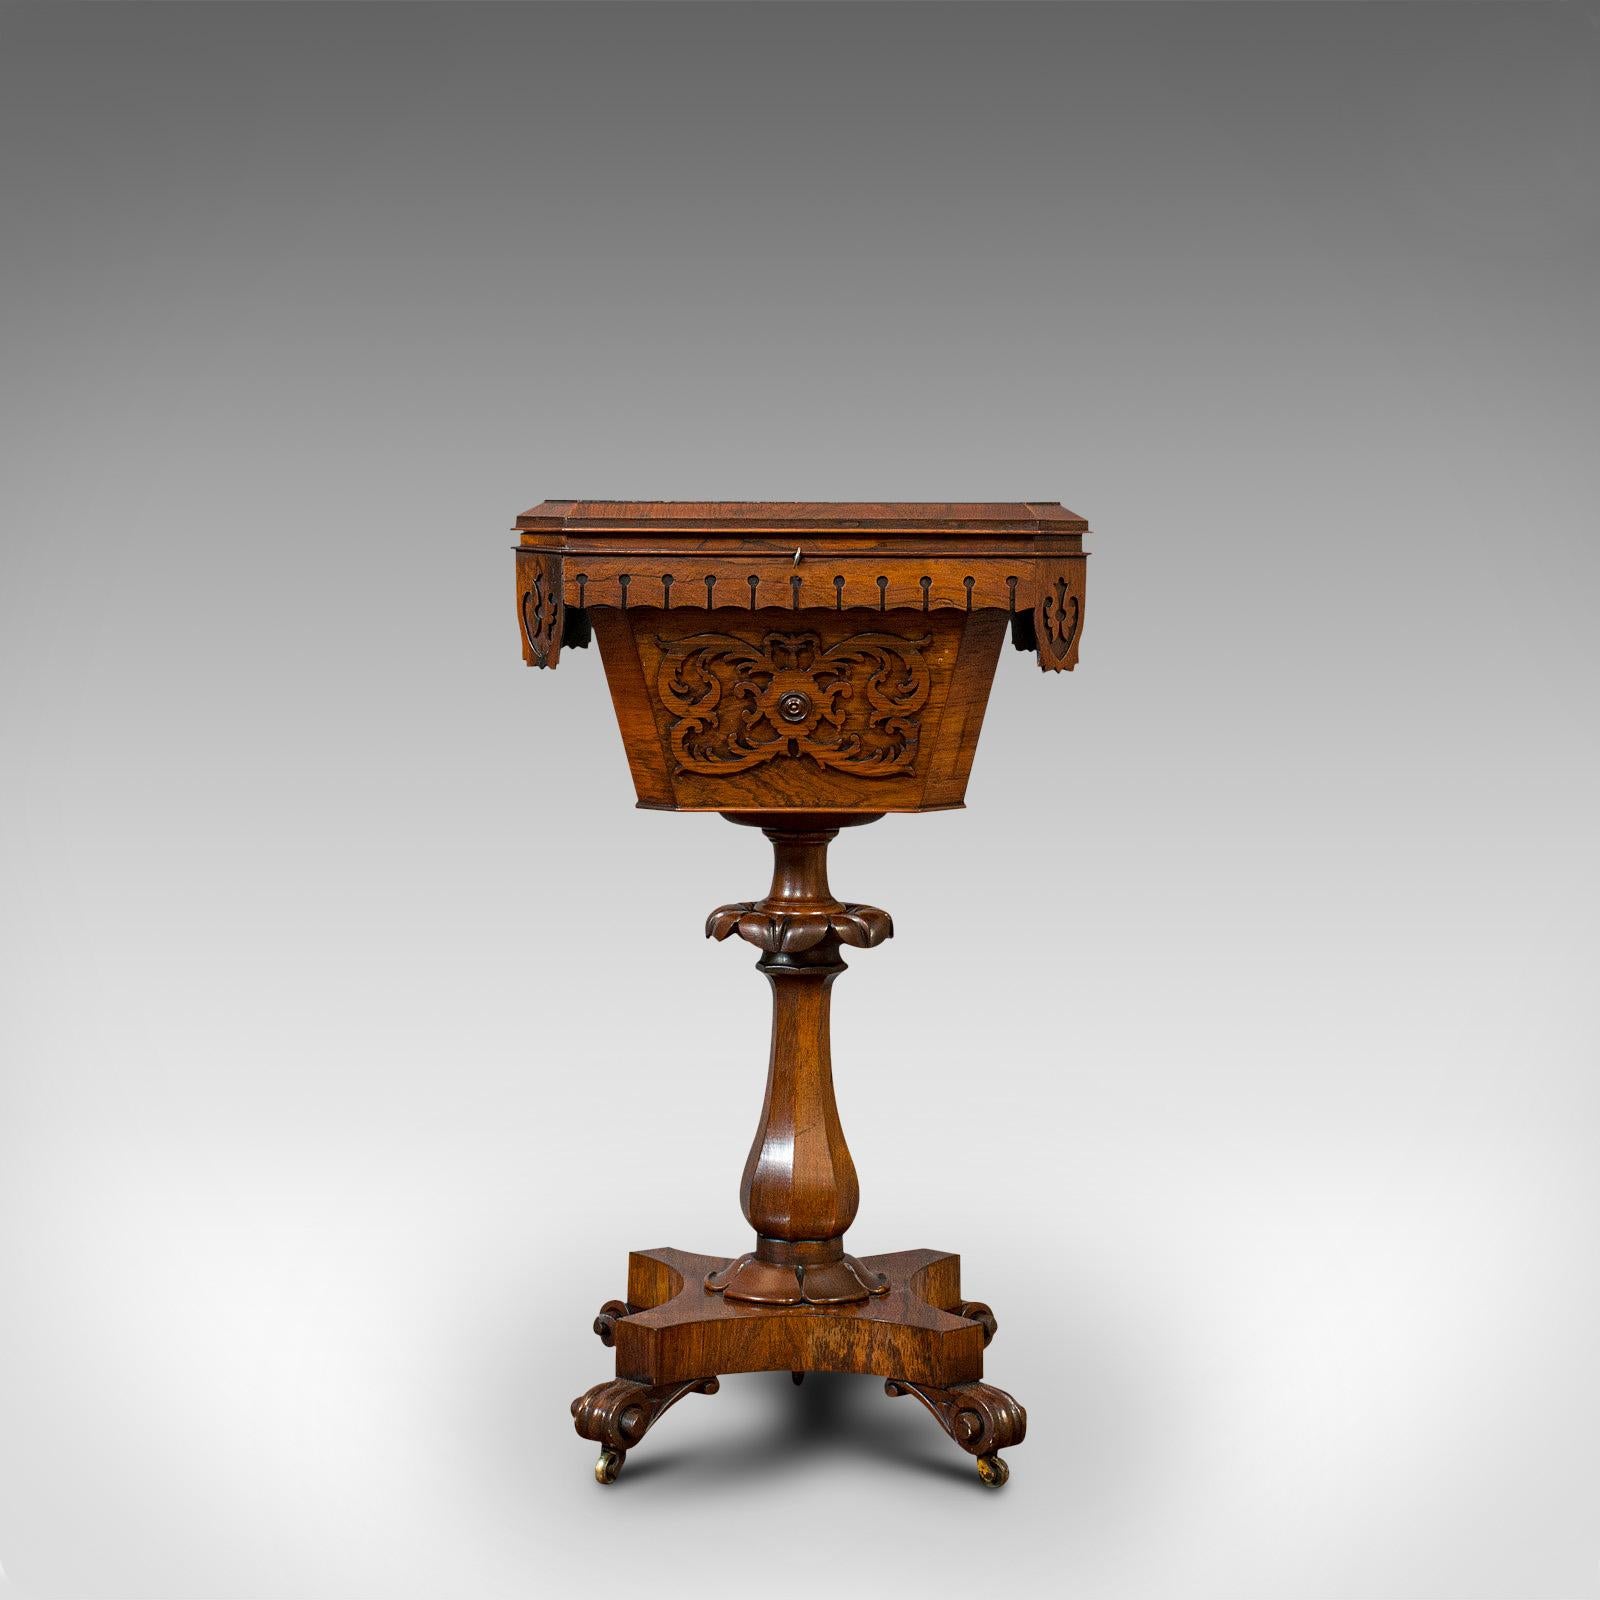 British Antique Lady's Work Box, English, Rosewood, Sewing, Table, Regency, circa 1820